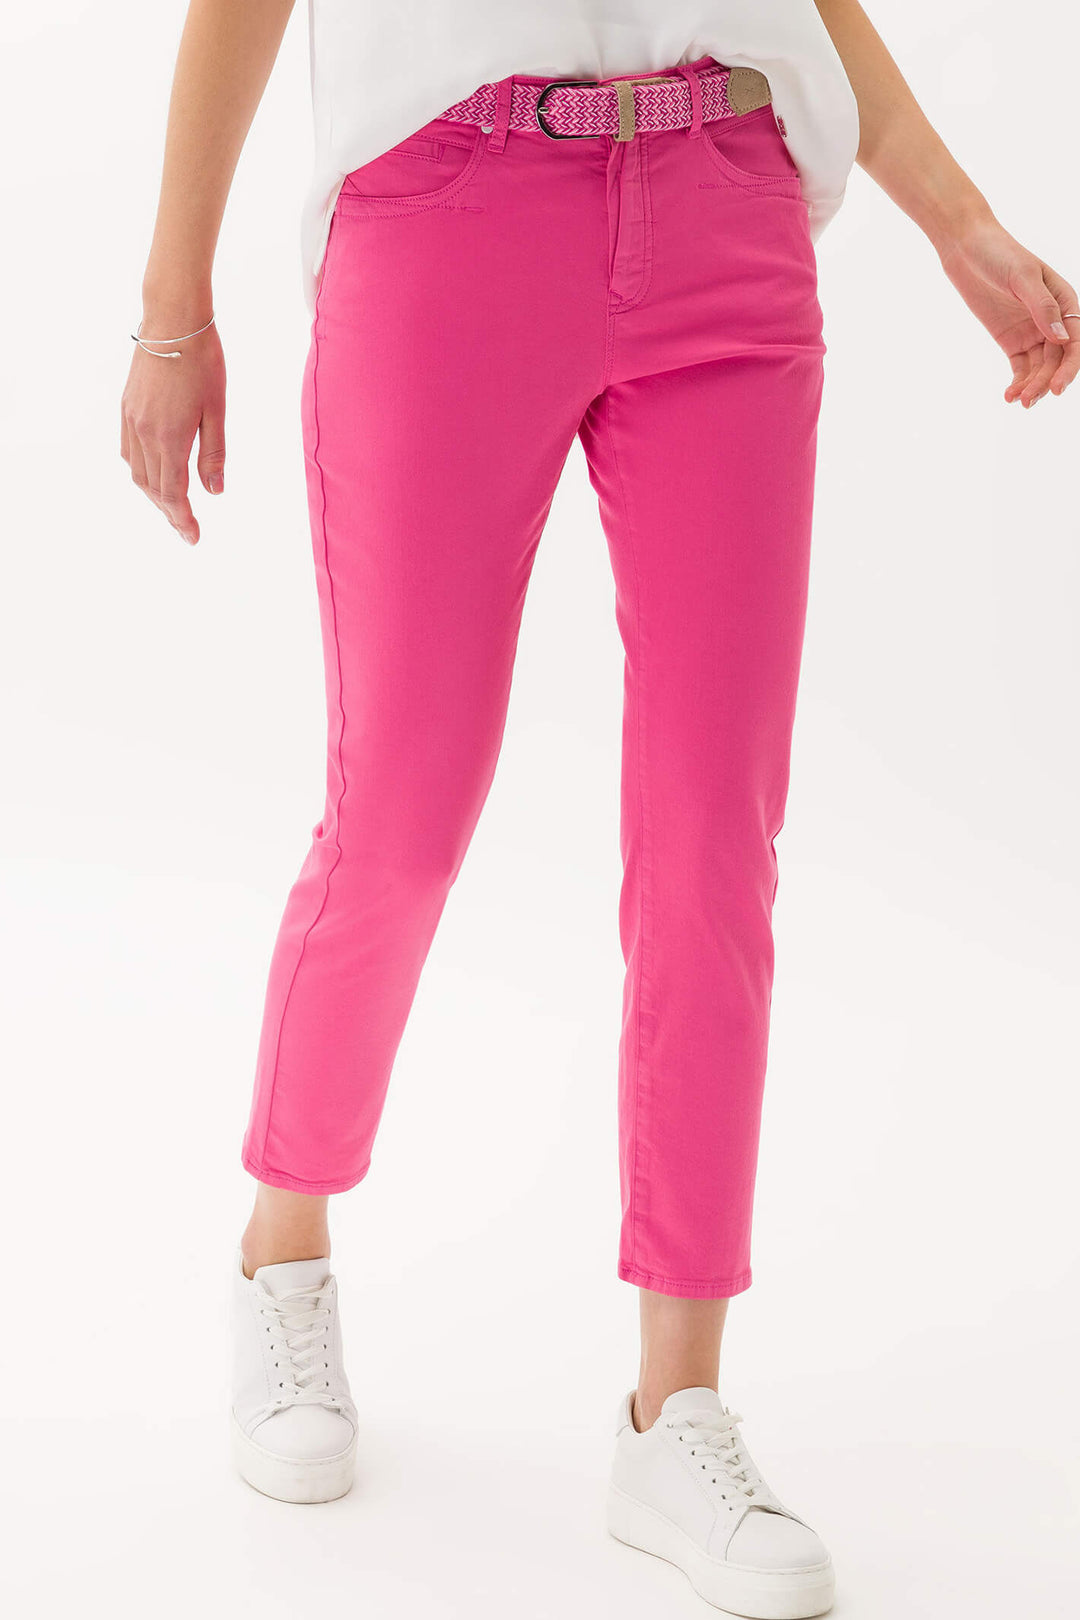 Brax Mary S 71-7558-85 Flush Pink Denim Jeans - Olivia Grace Fashion